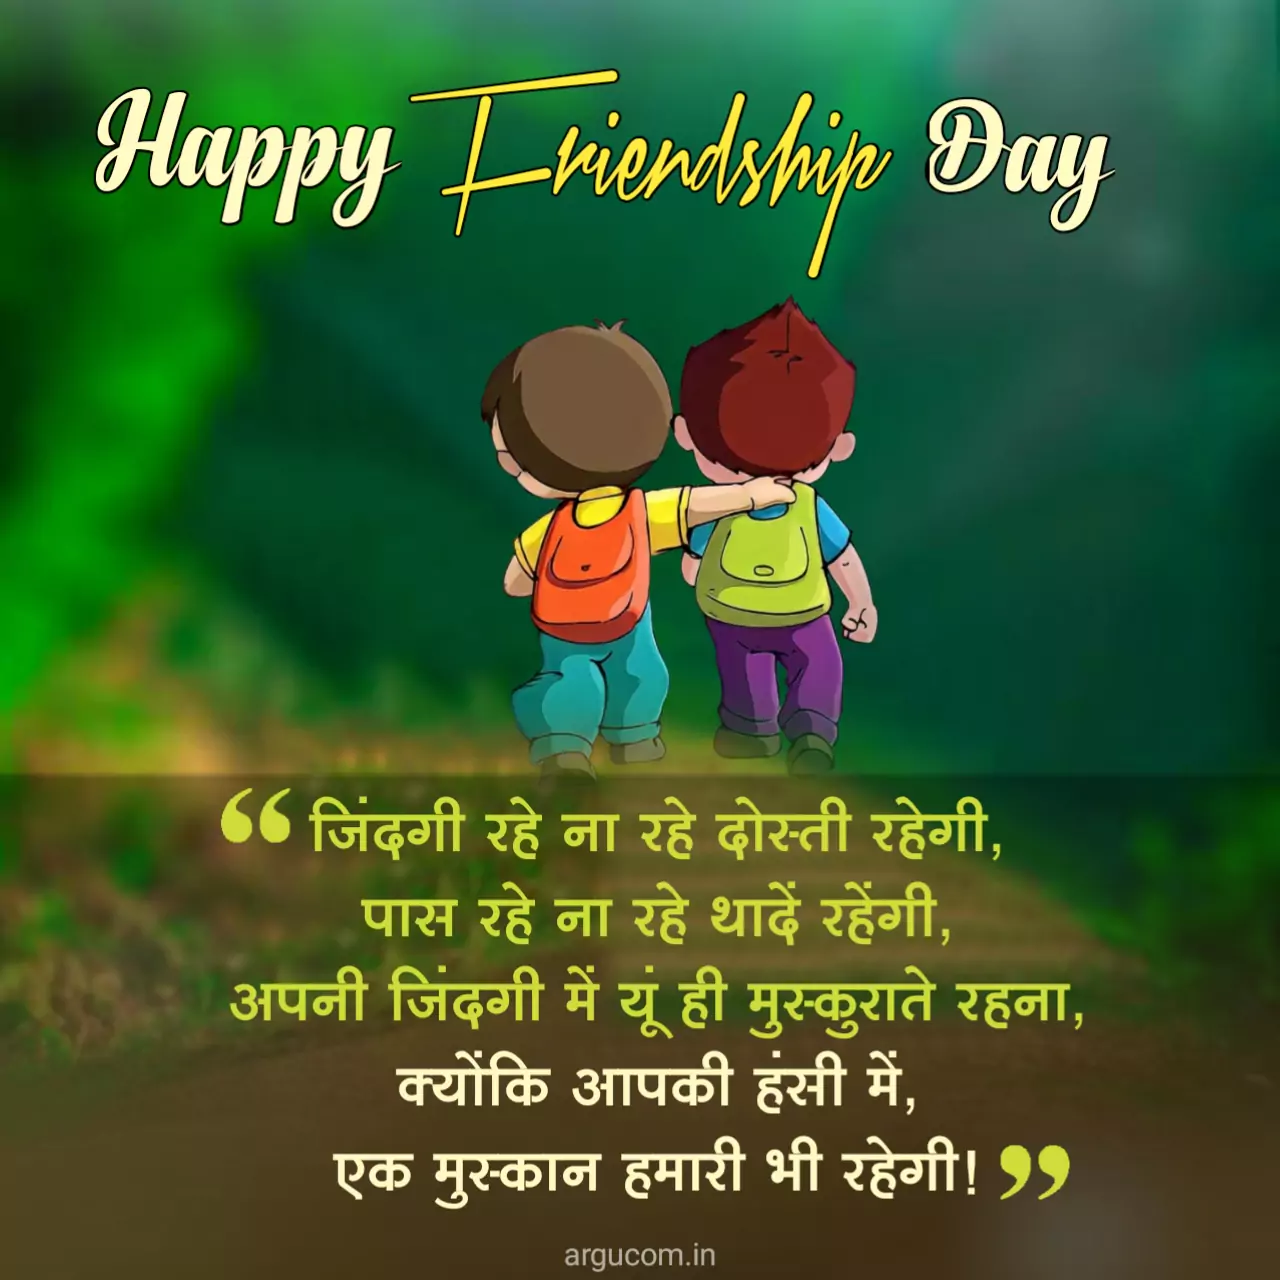 Friendship Day shayari in hindi, फ्रेंडशिप डे शायरी हिंदी